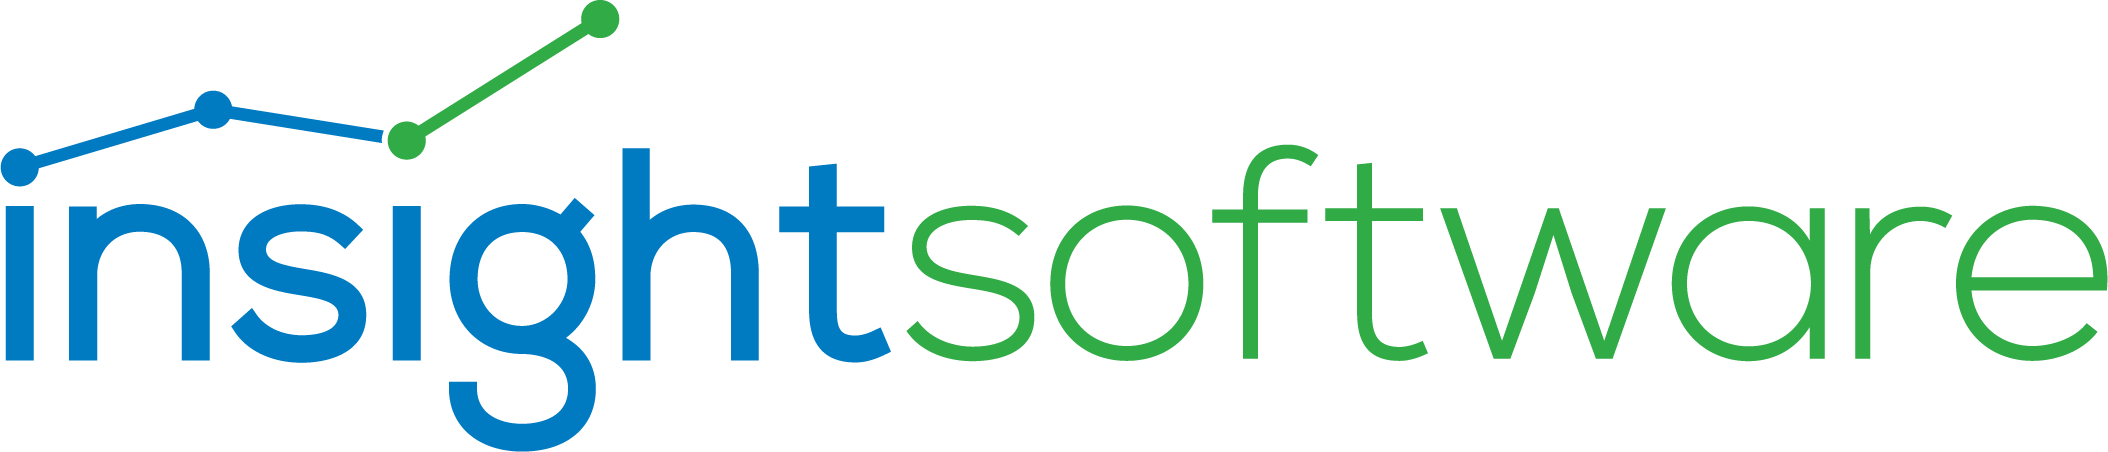 insightsoftware logo.